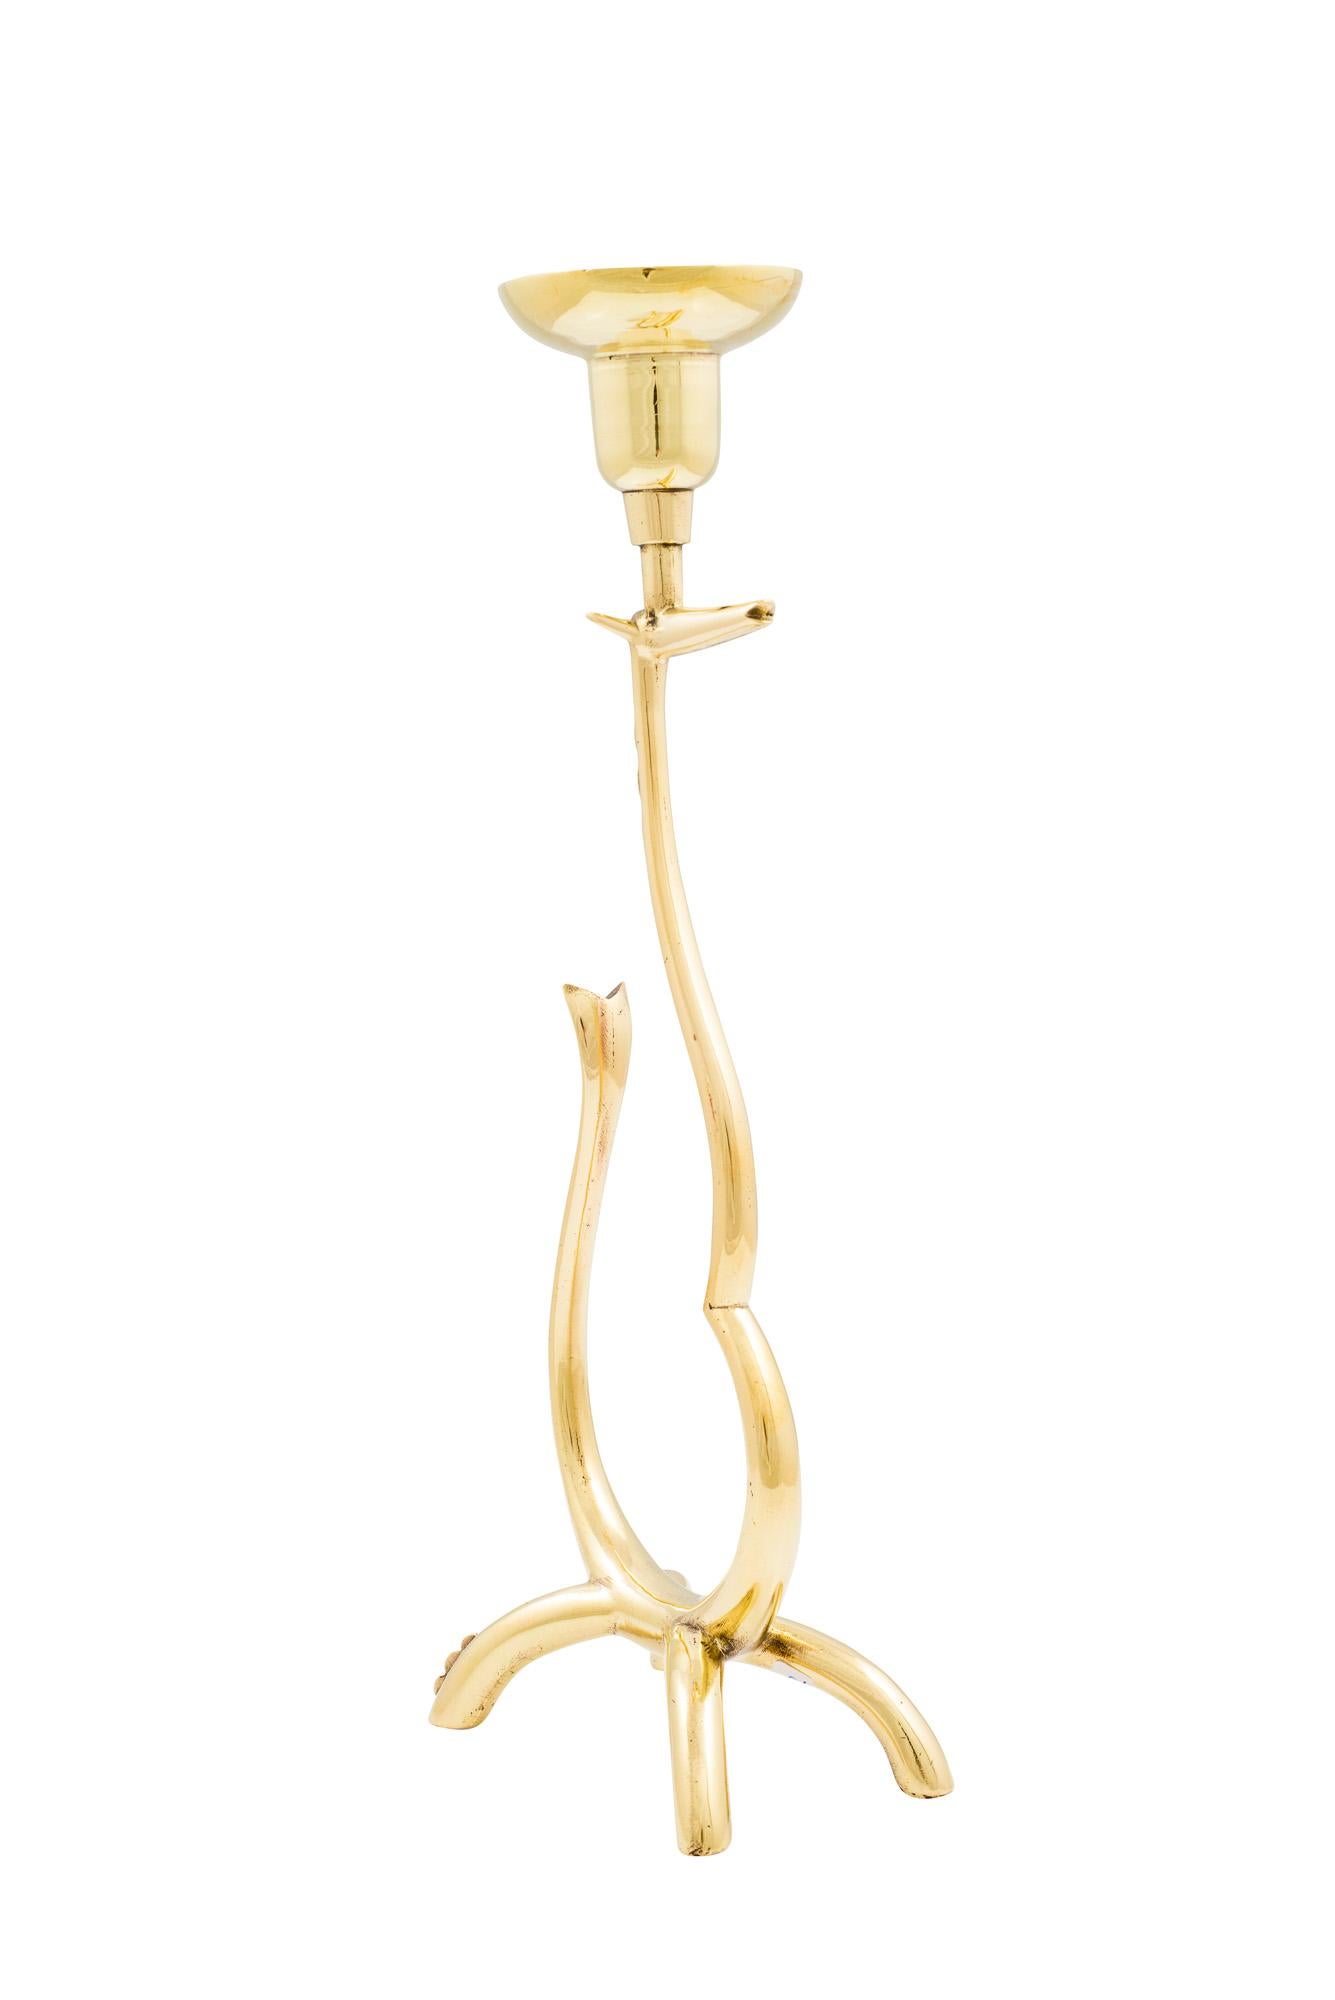 Austrian Werkstatte Hagenauer Candlestick with Mythical Creature, Brass Art Deco For Sale